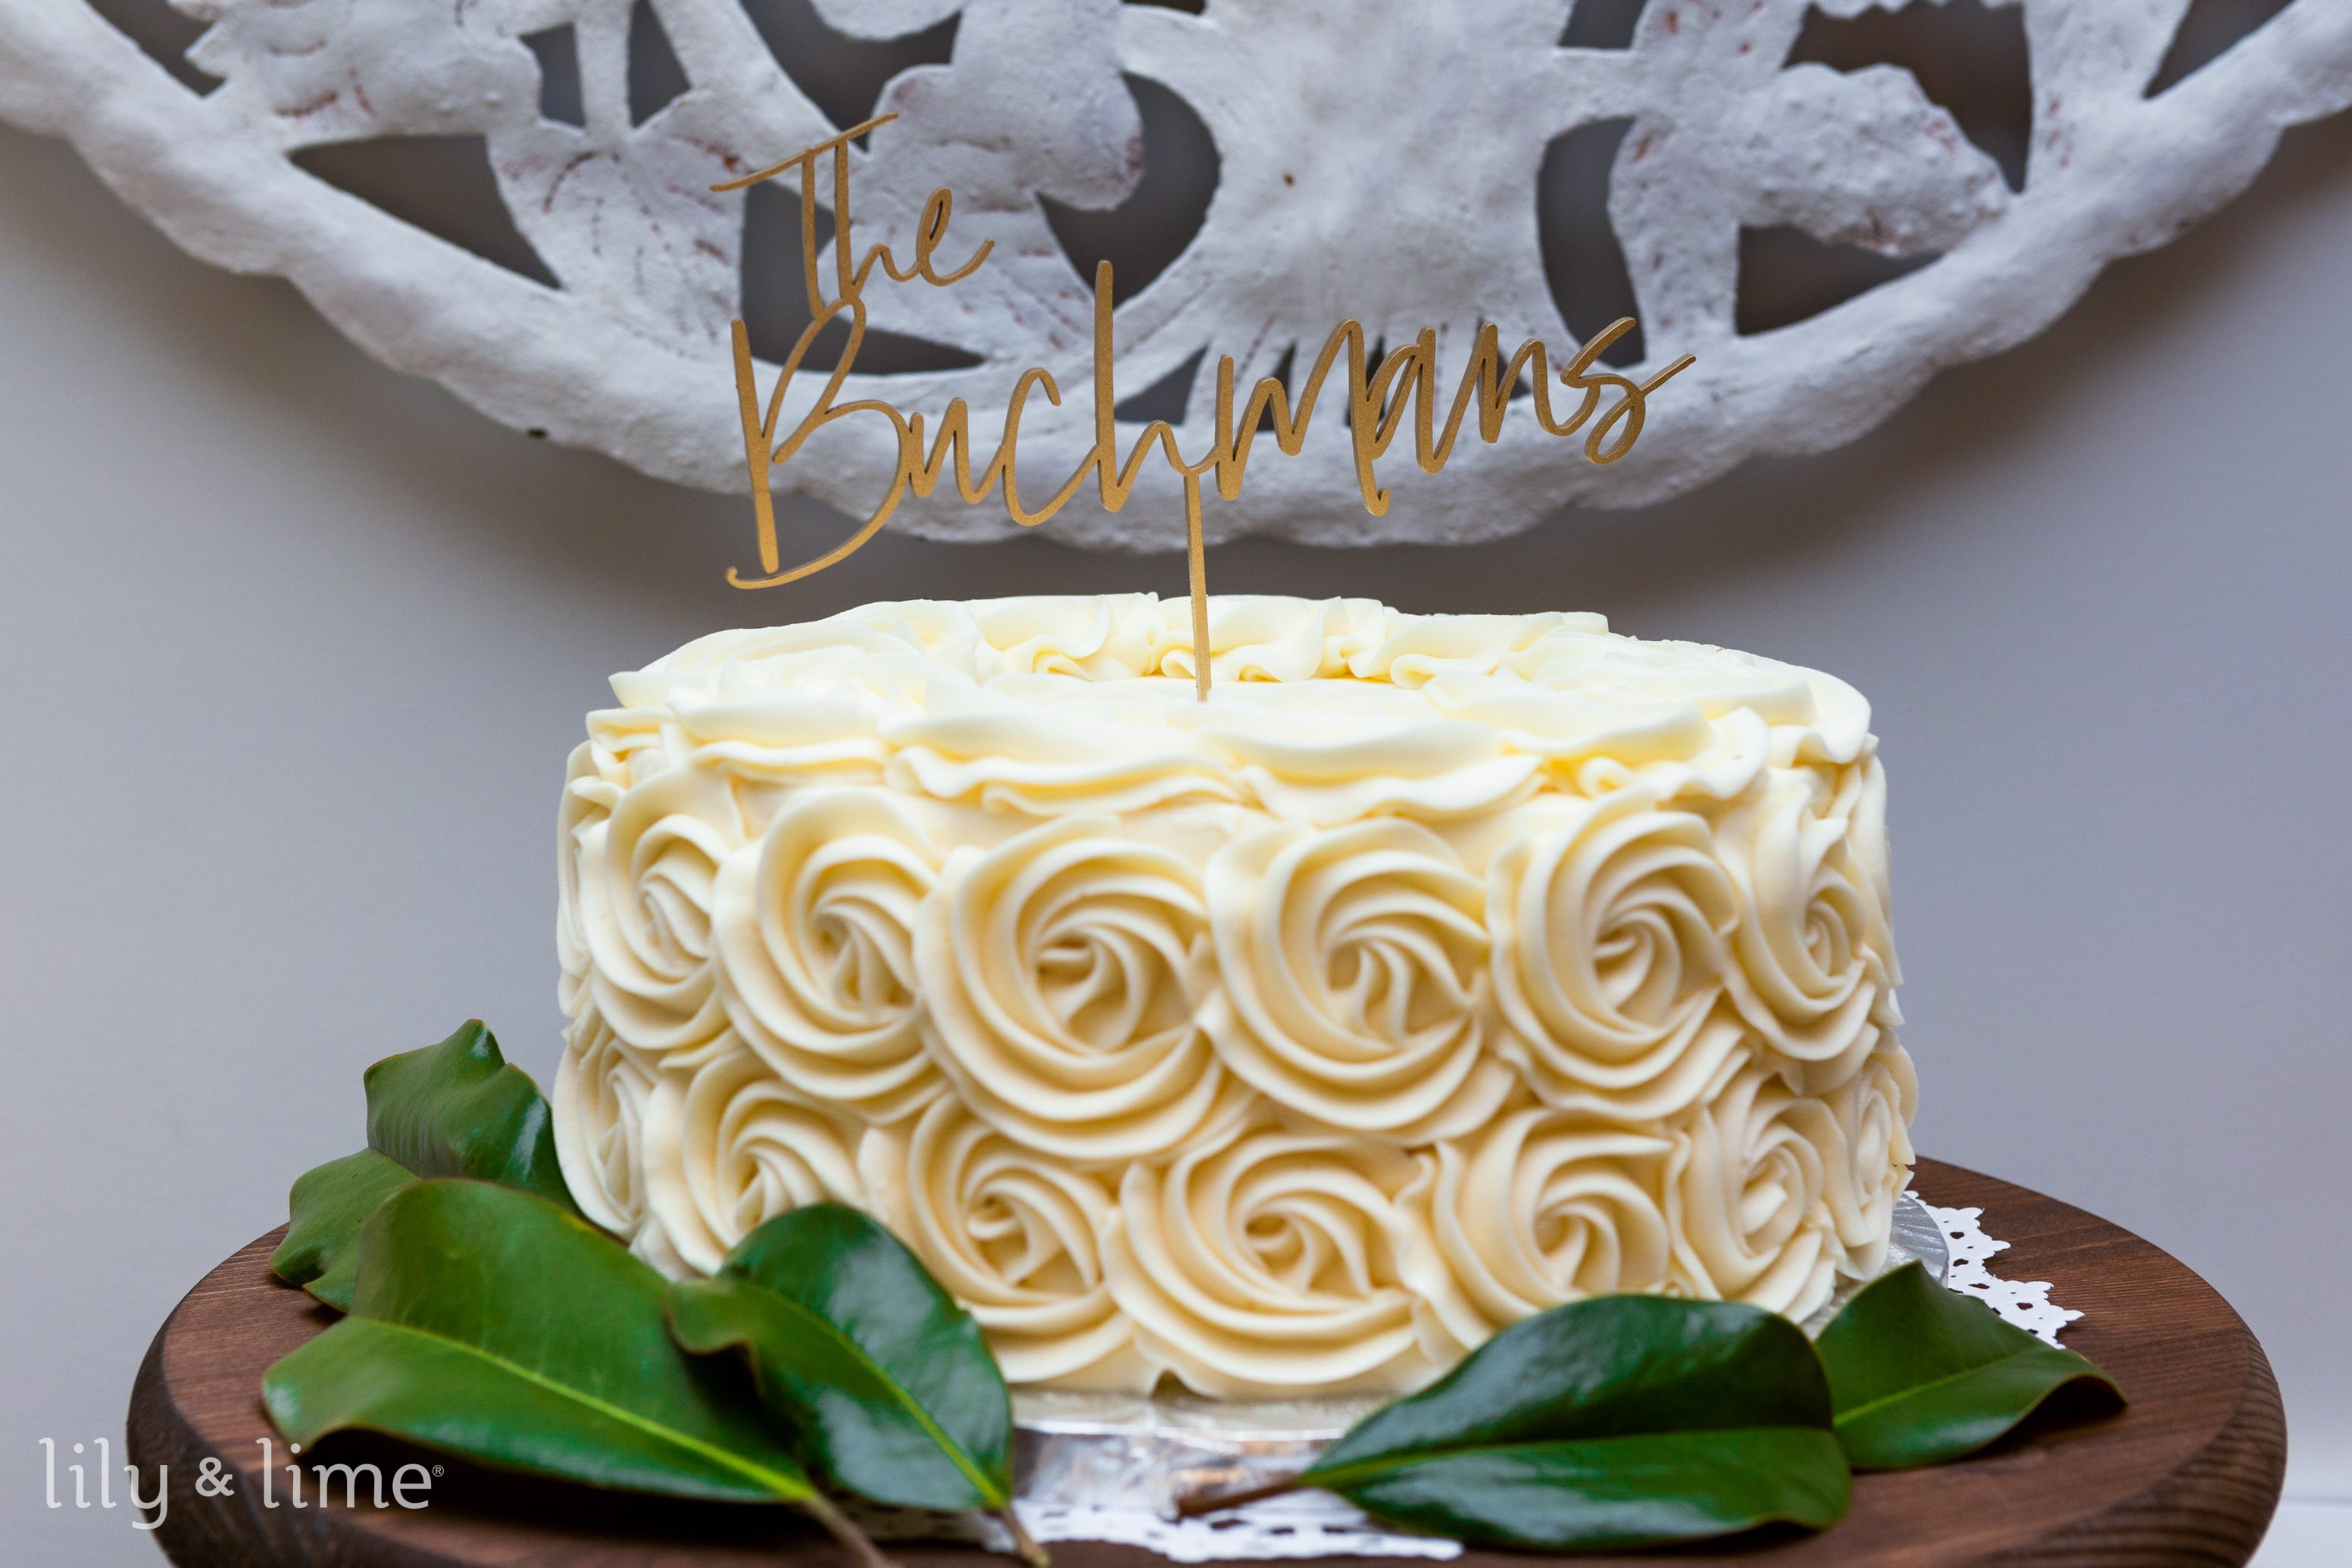 Make your wedding day stunning with elegant wedding cakes